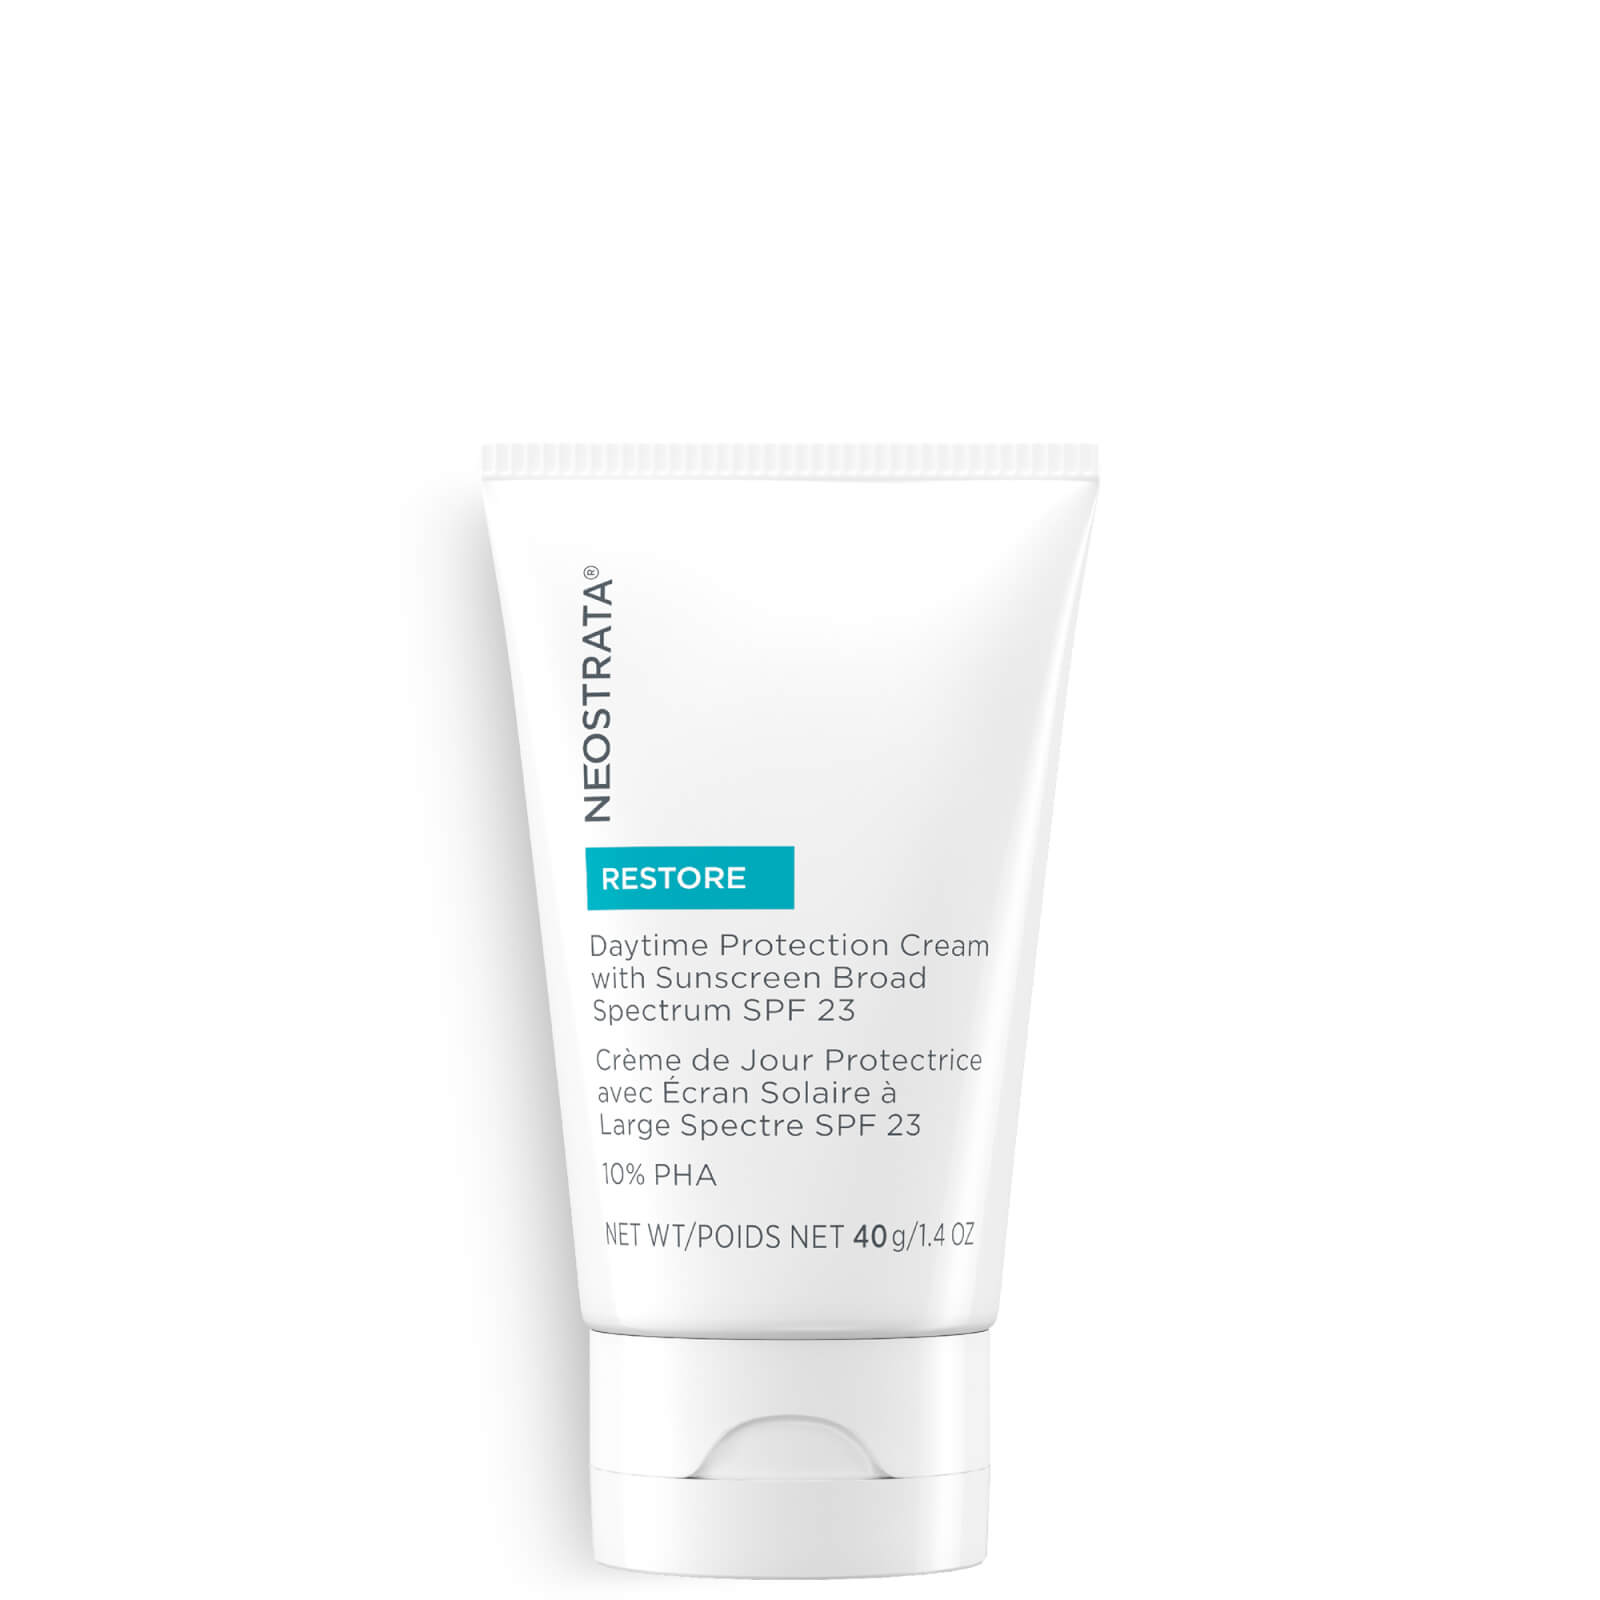 Photos - Sun Skin Care Neostrata Restore Daytime Protection Cream Suncream for Face with SPF 23 4